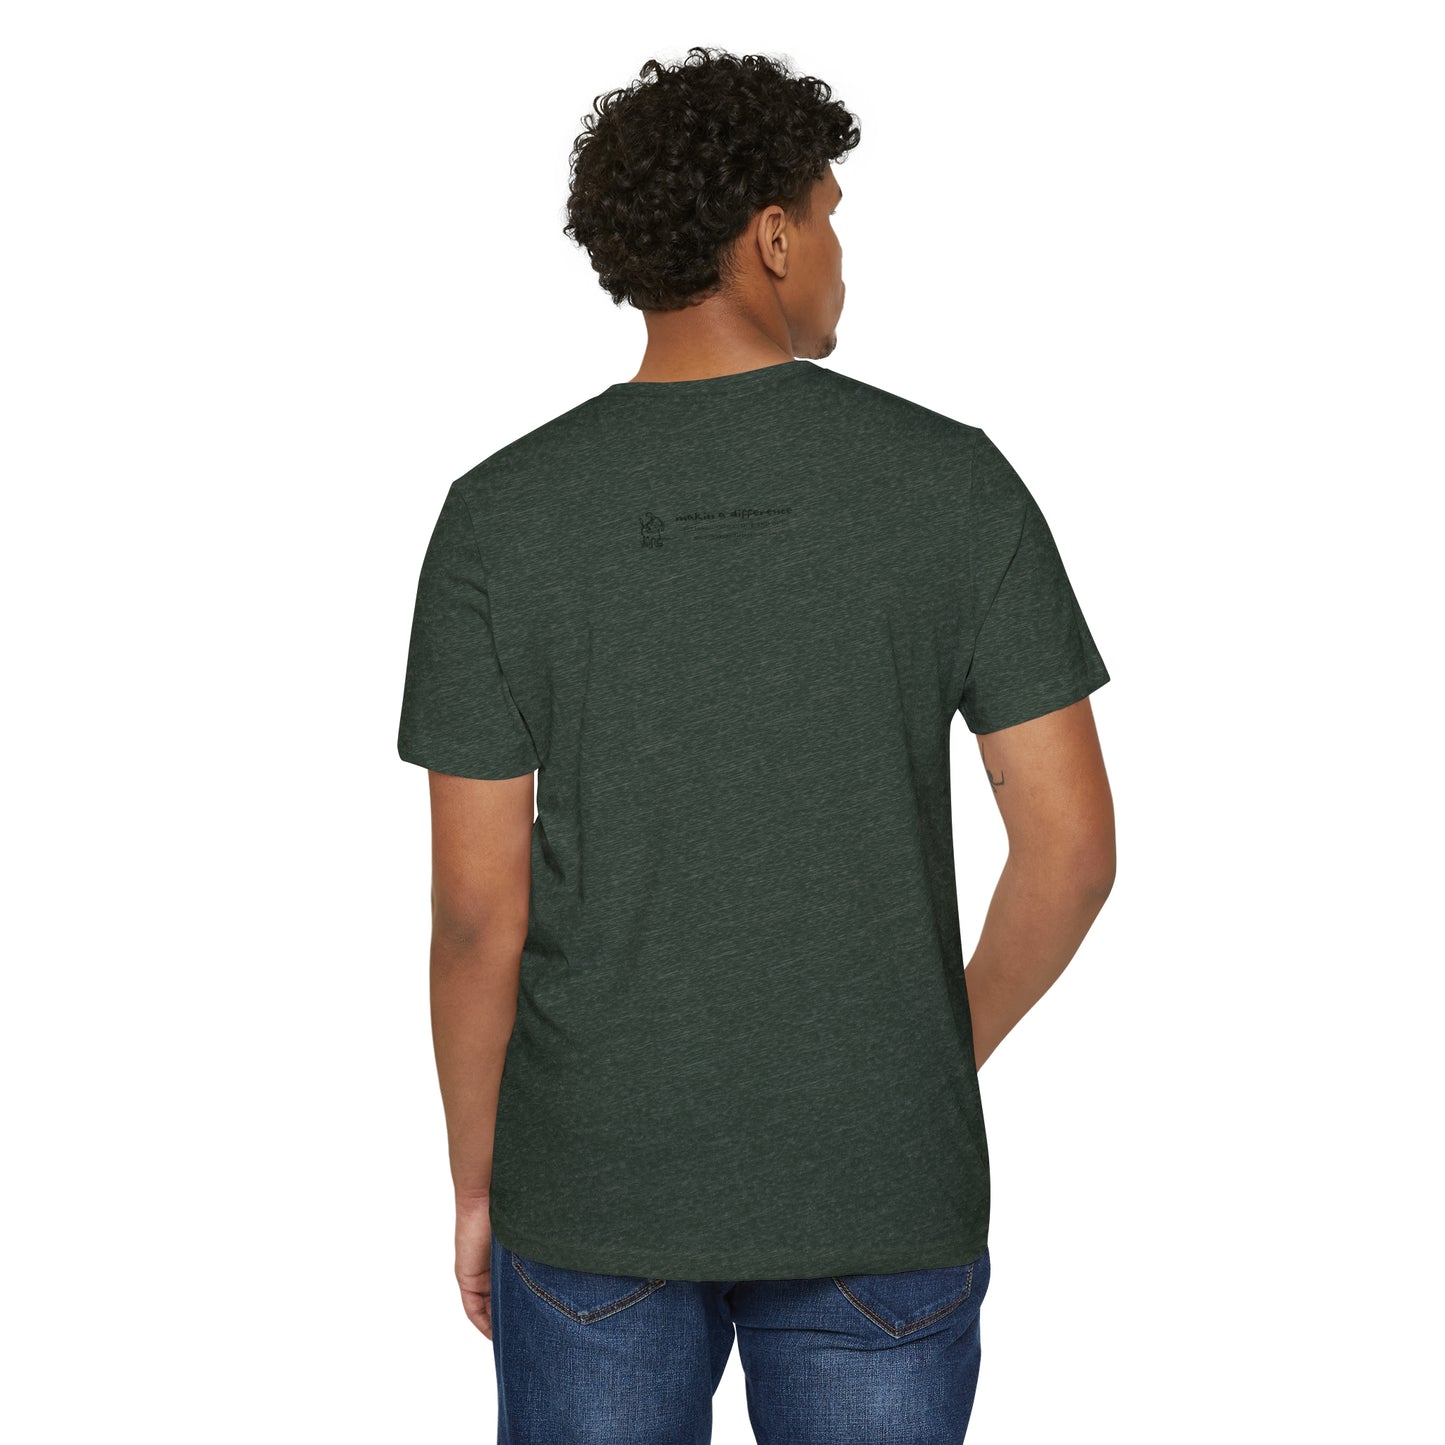 Sustainable Unisex Recycled Organic T-Shirt